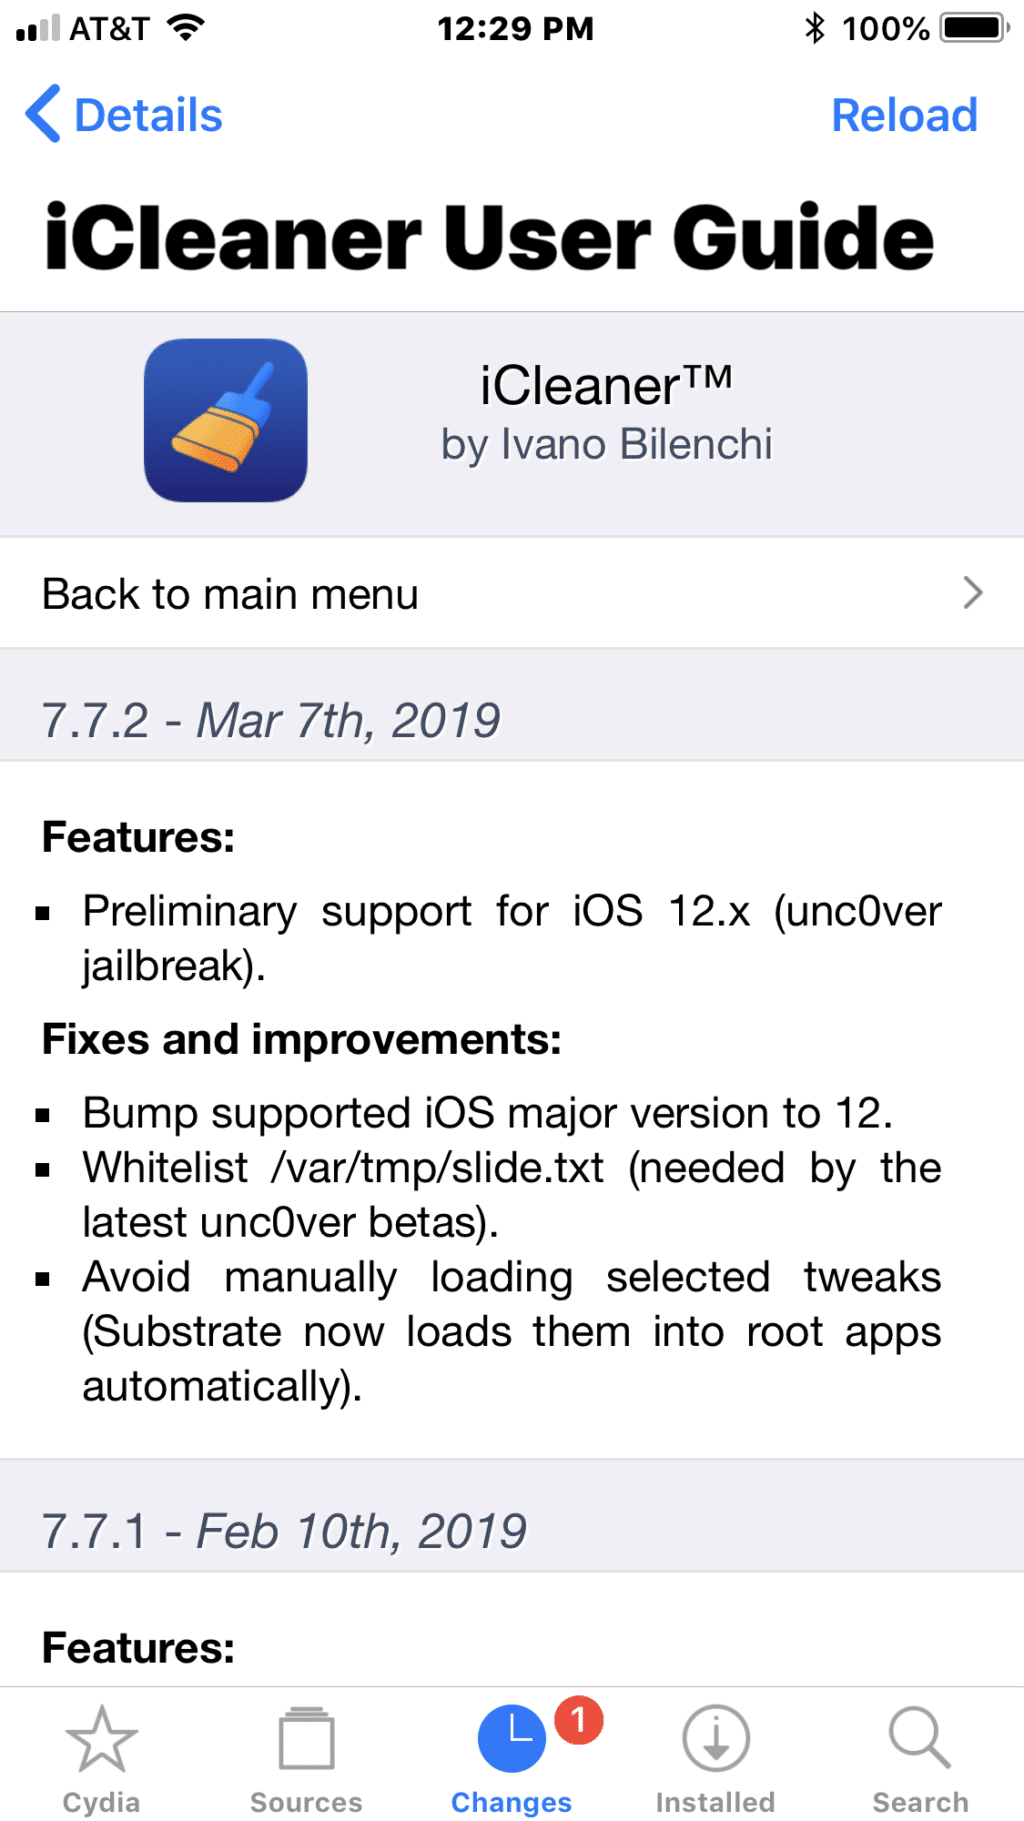 iCleaner Pro iOS 12 update